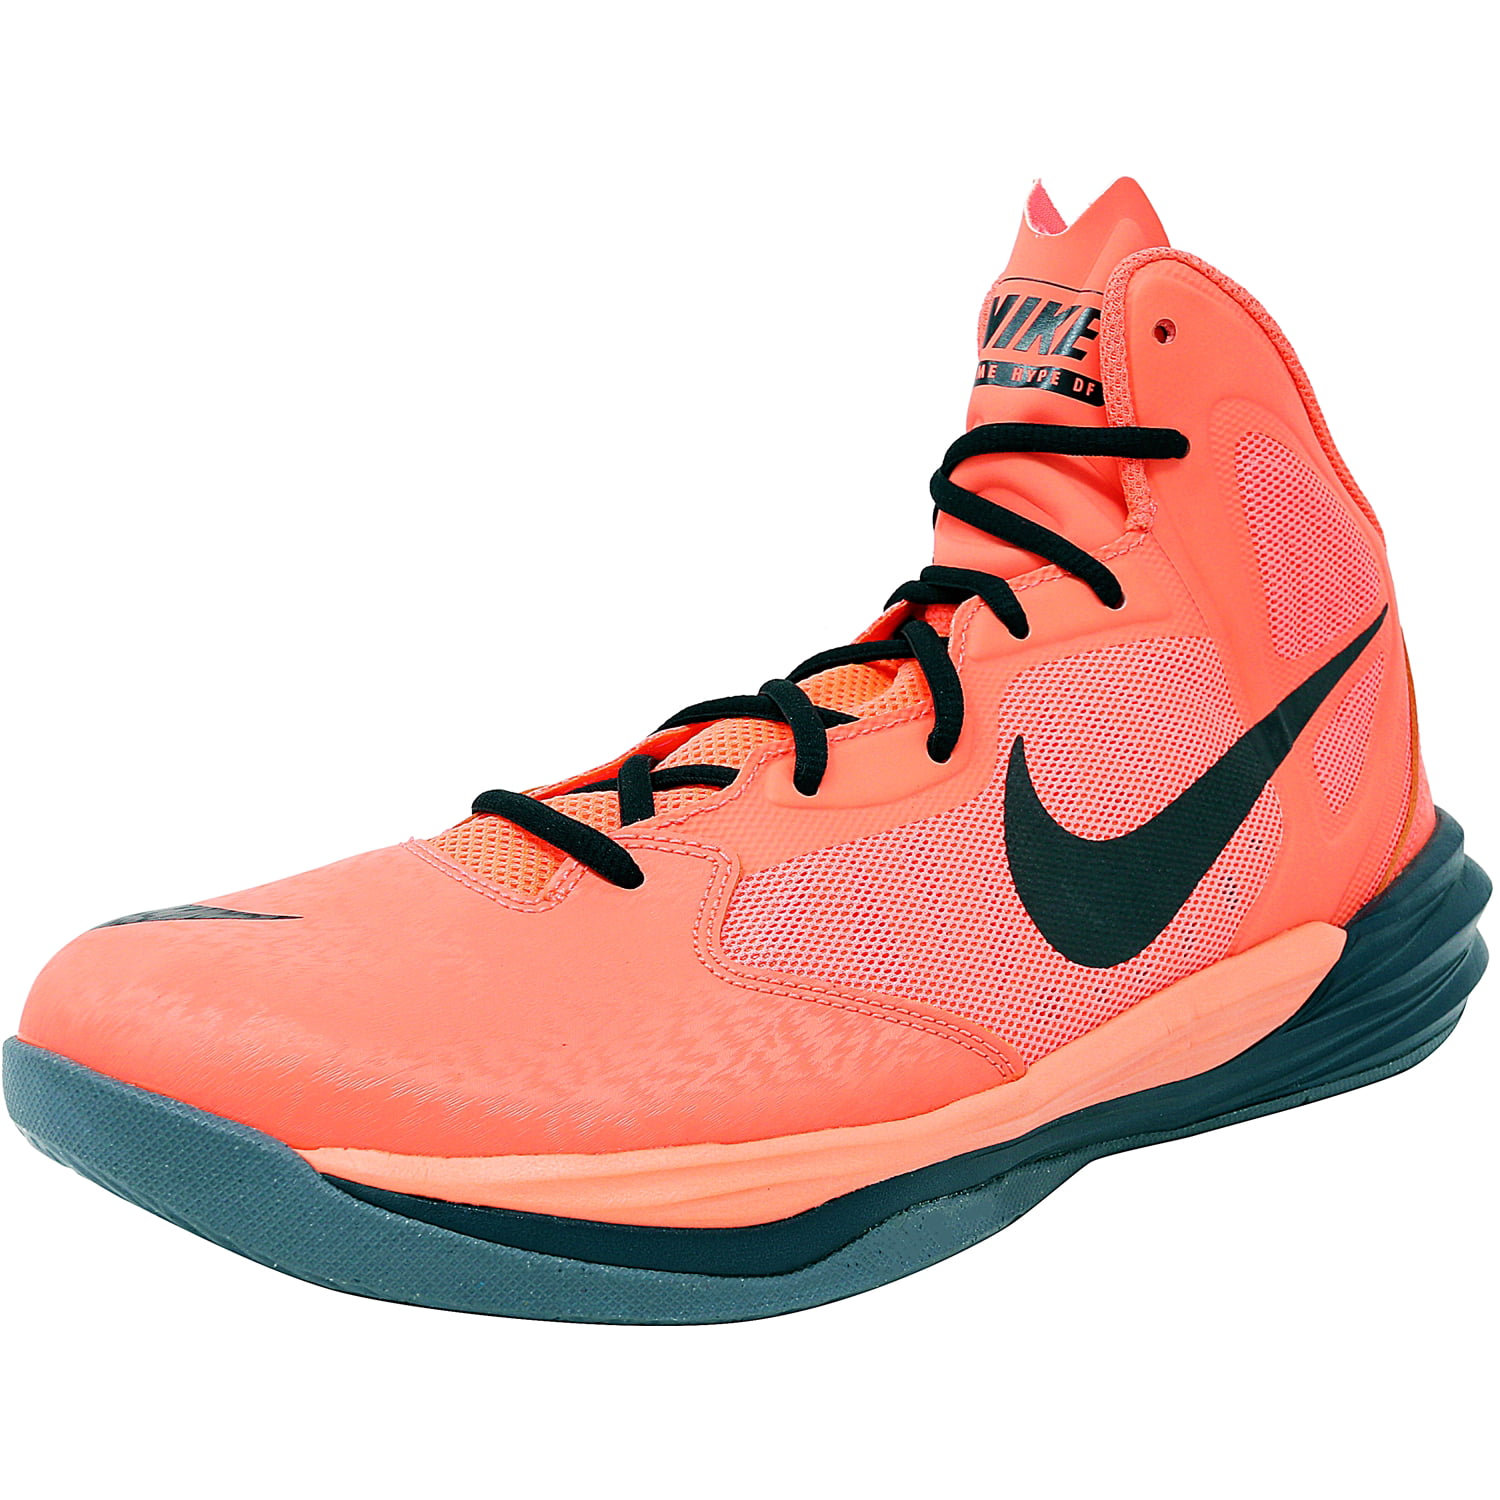 Nike Men's 683705 801 HighTop Basketball Shoe 11.5M Walmart Canada